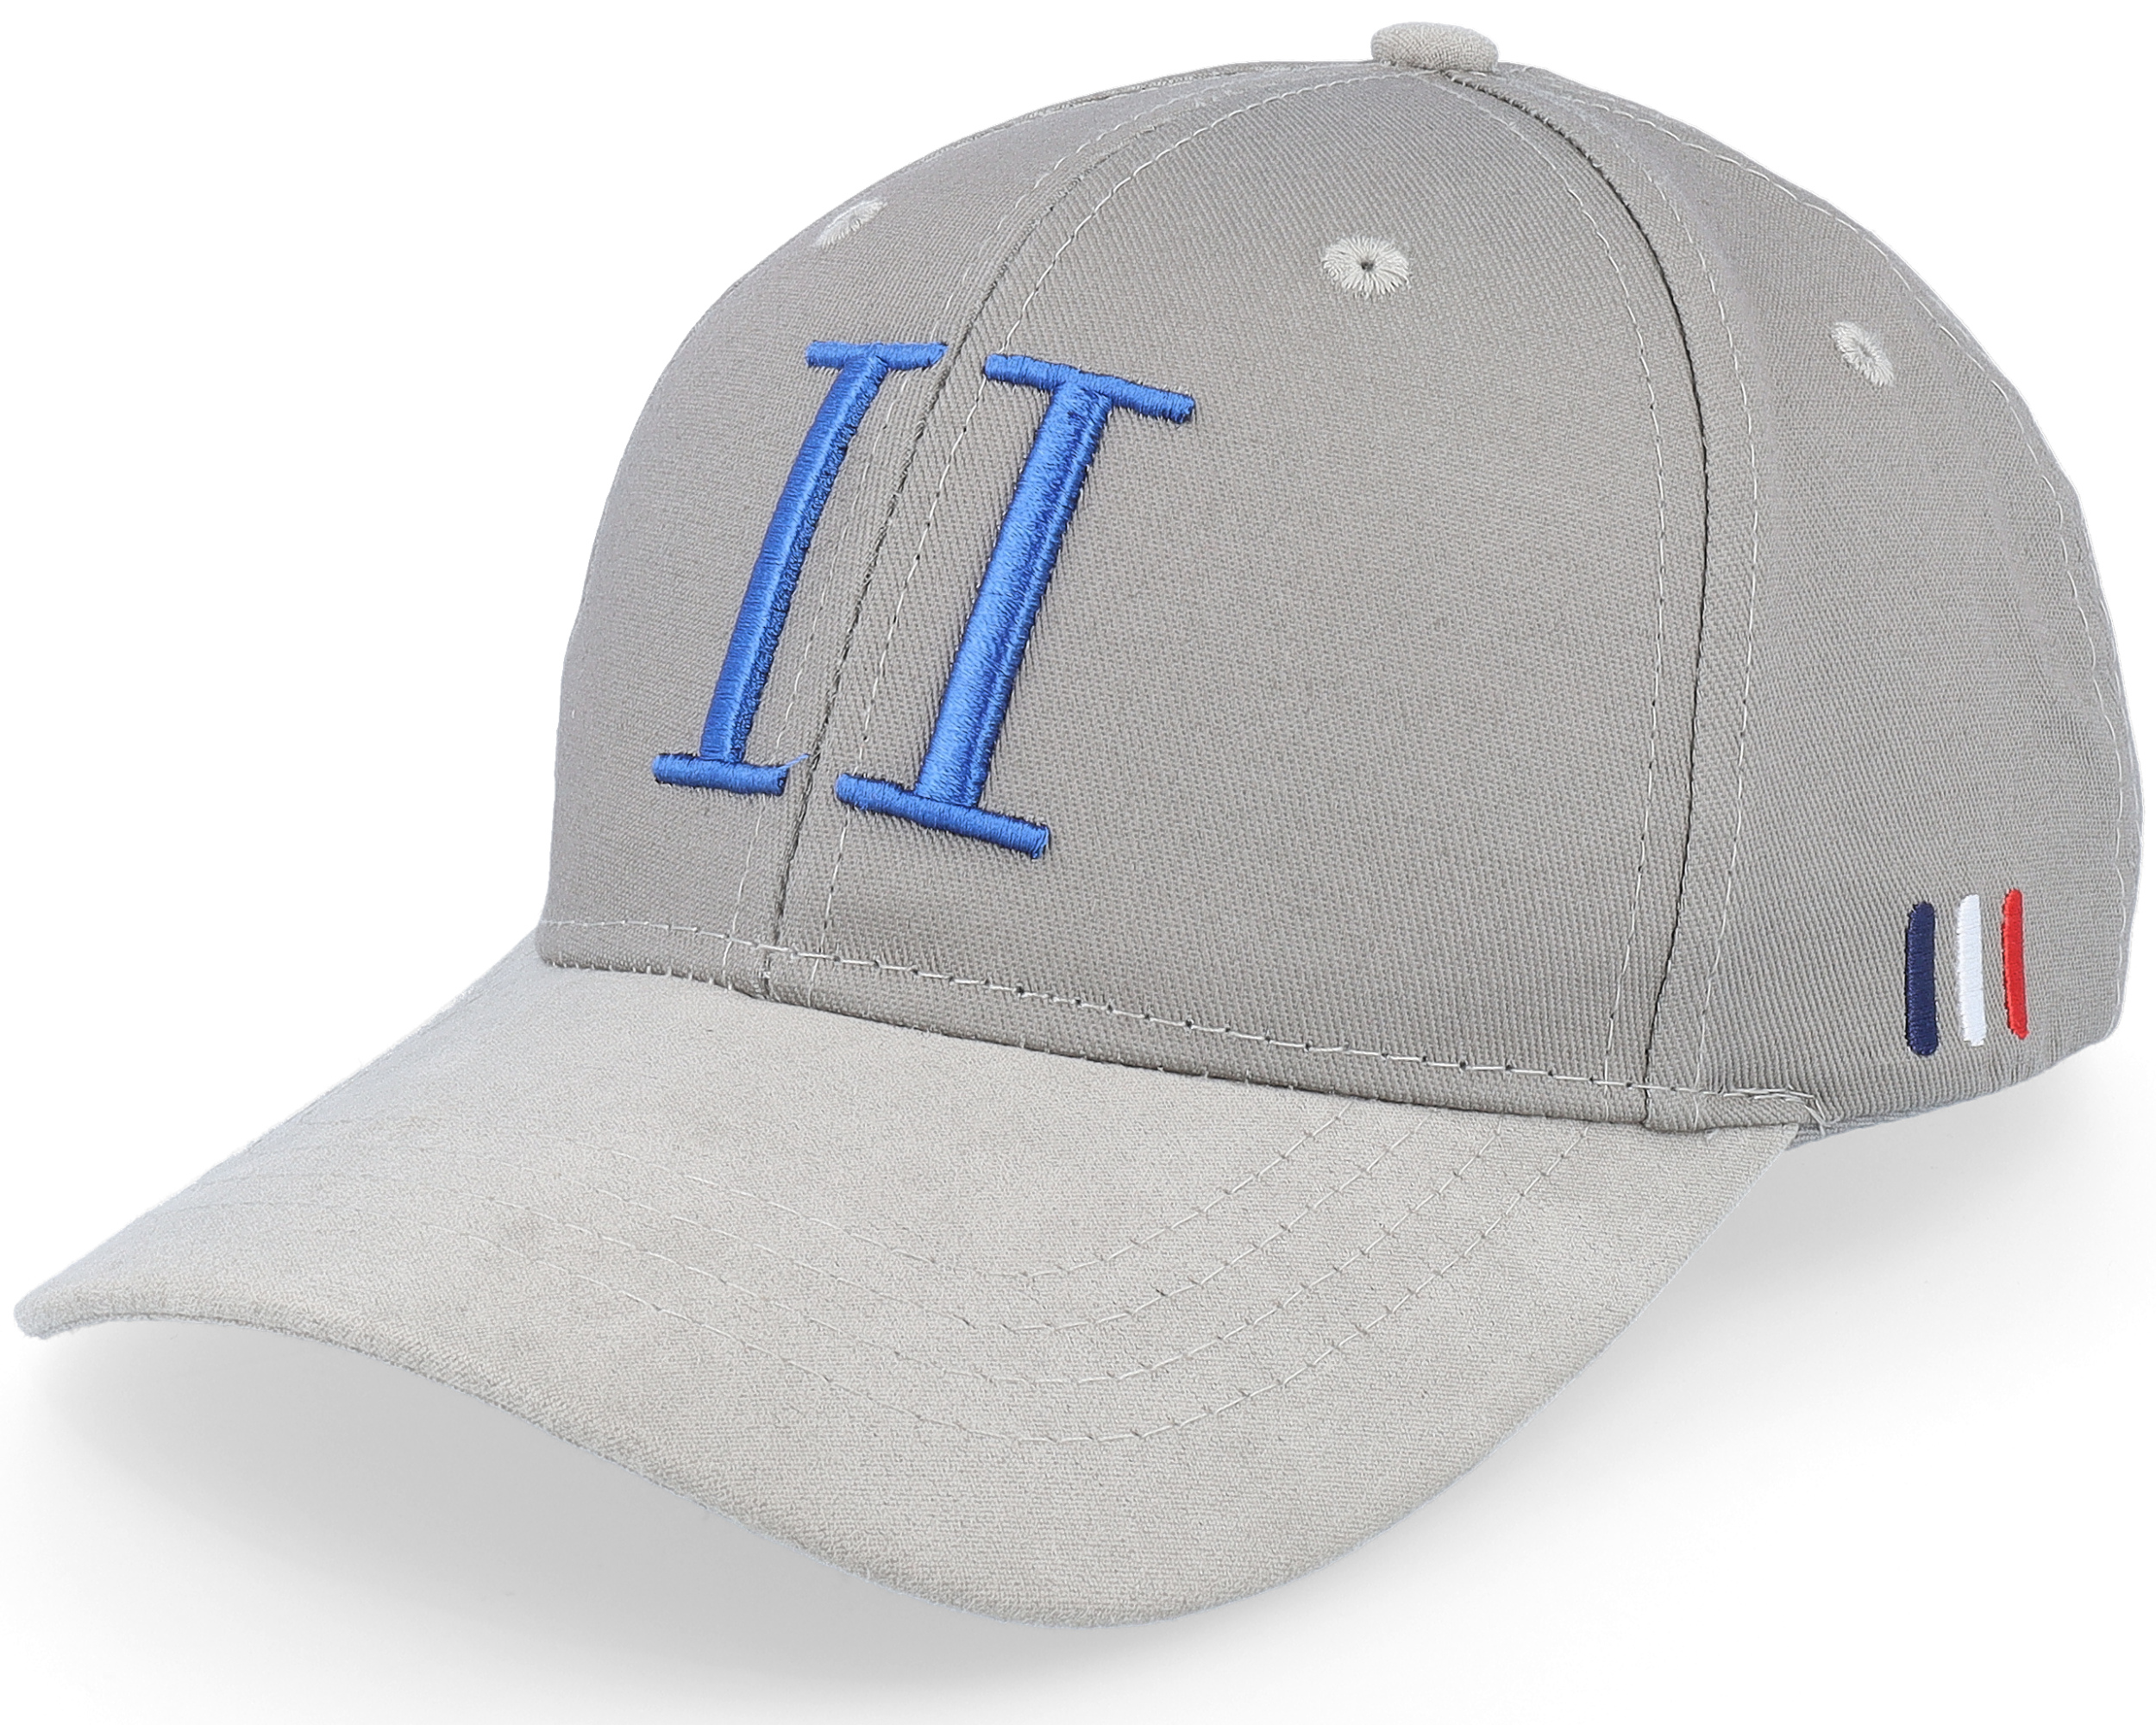 Baseball Cap Suede Ii Mirage Grey/Palace Blue Adjustable - Les Deux cap ...